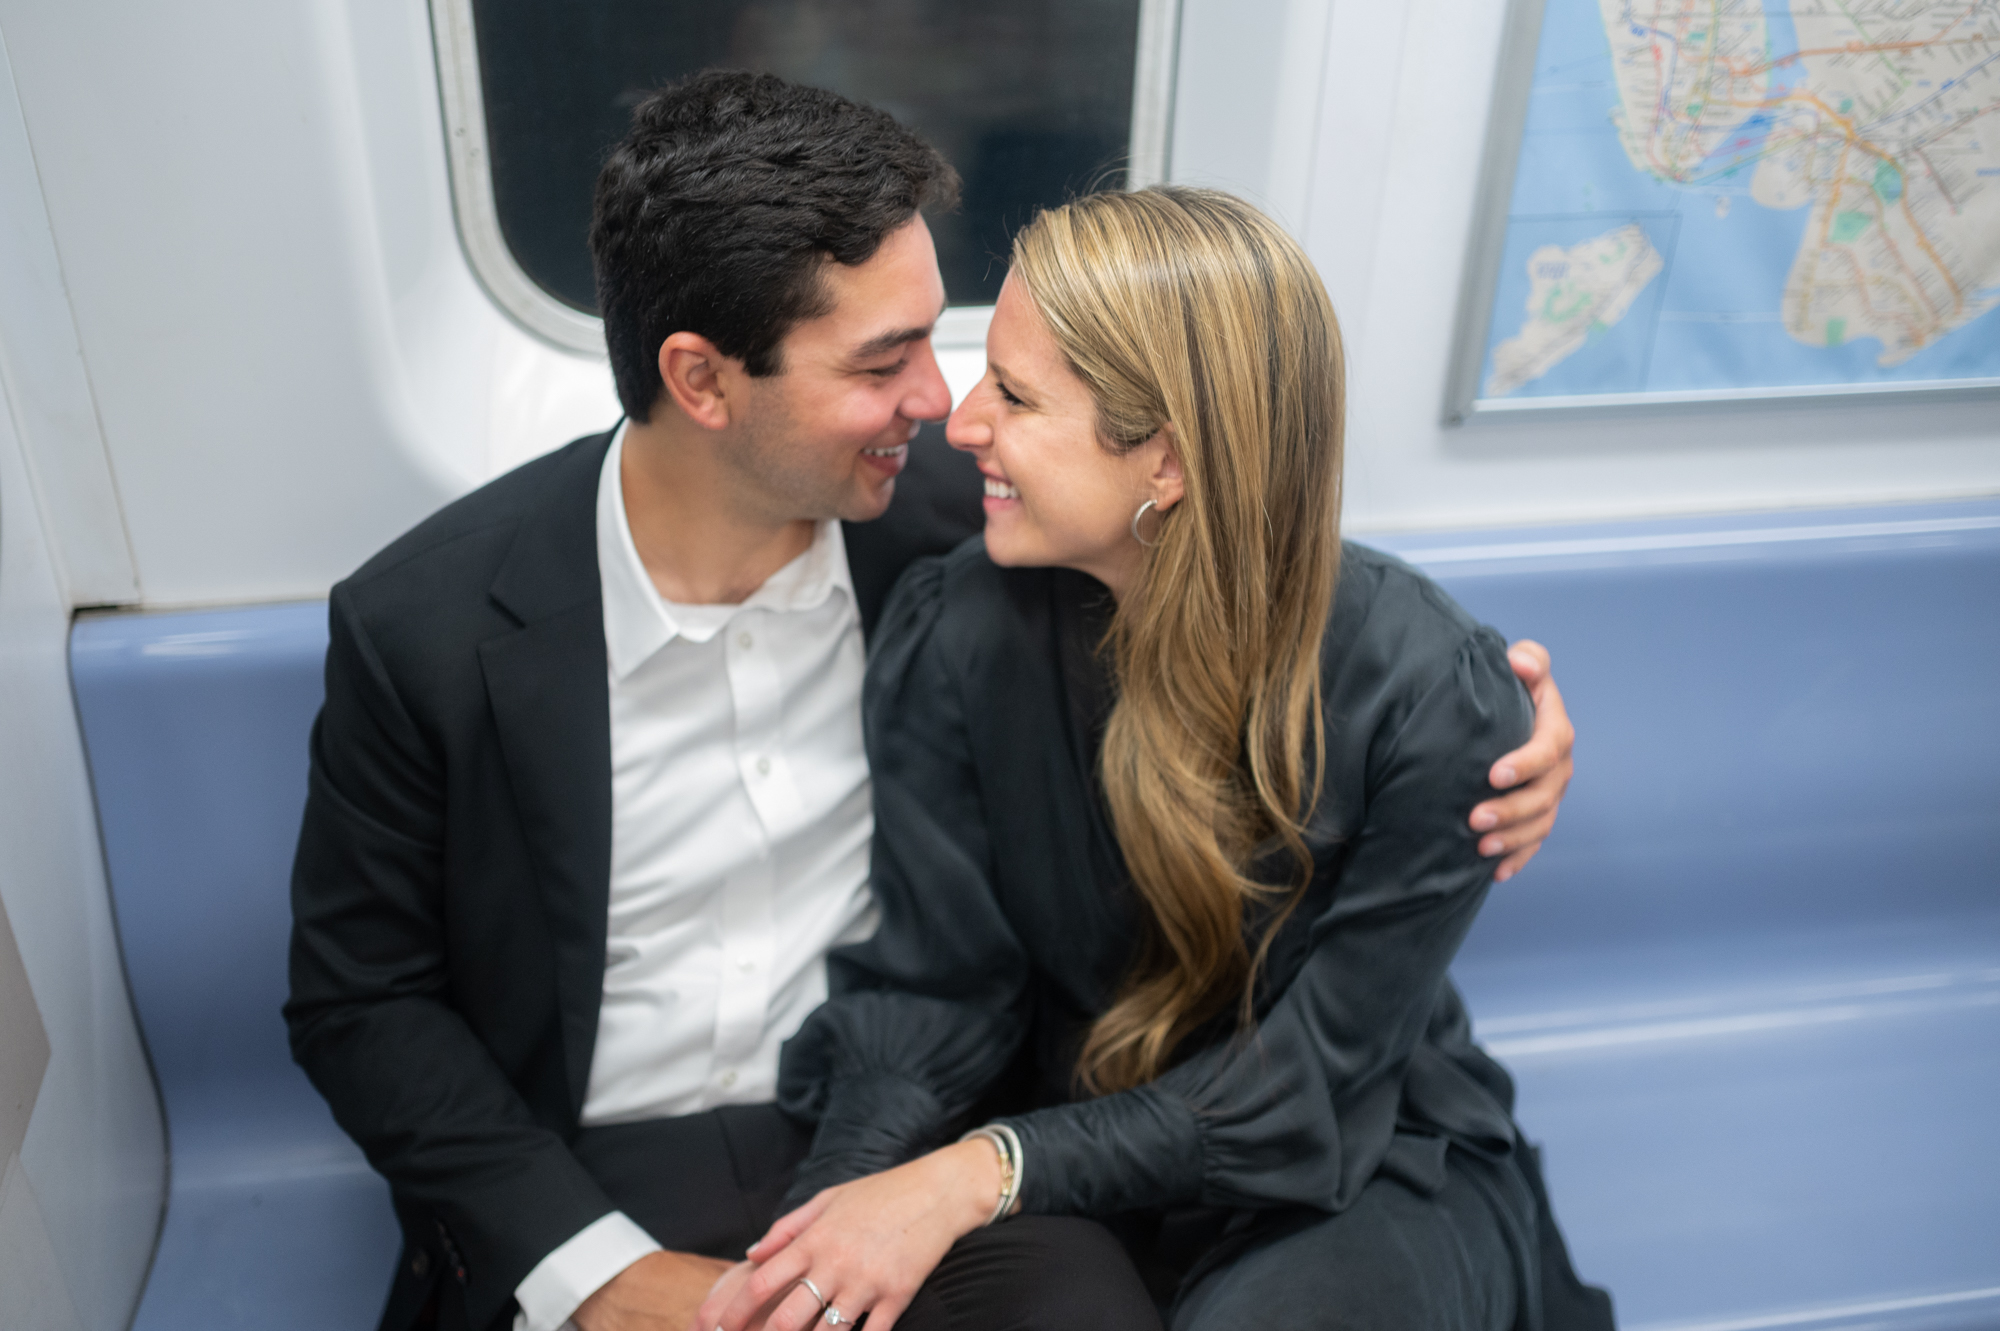 couple on NYC subway